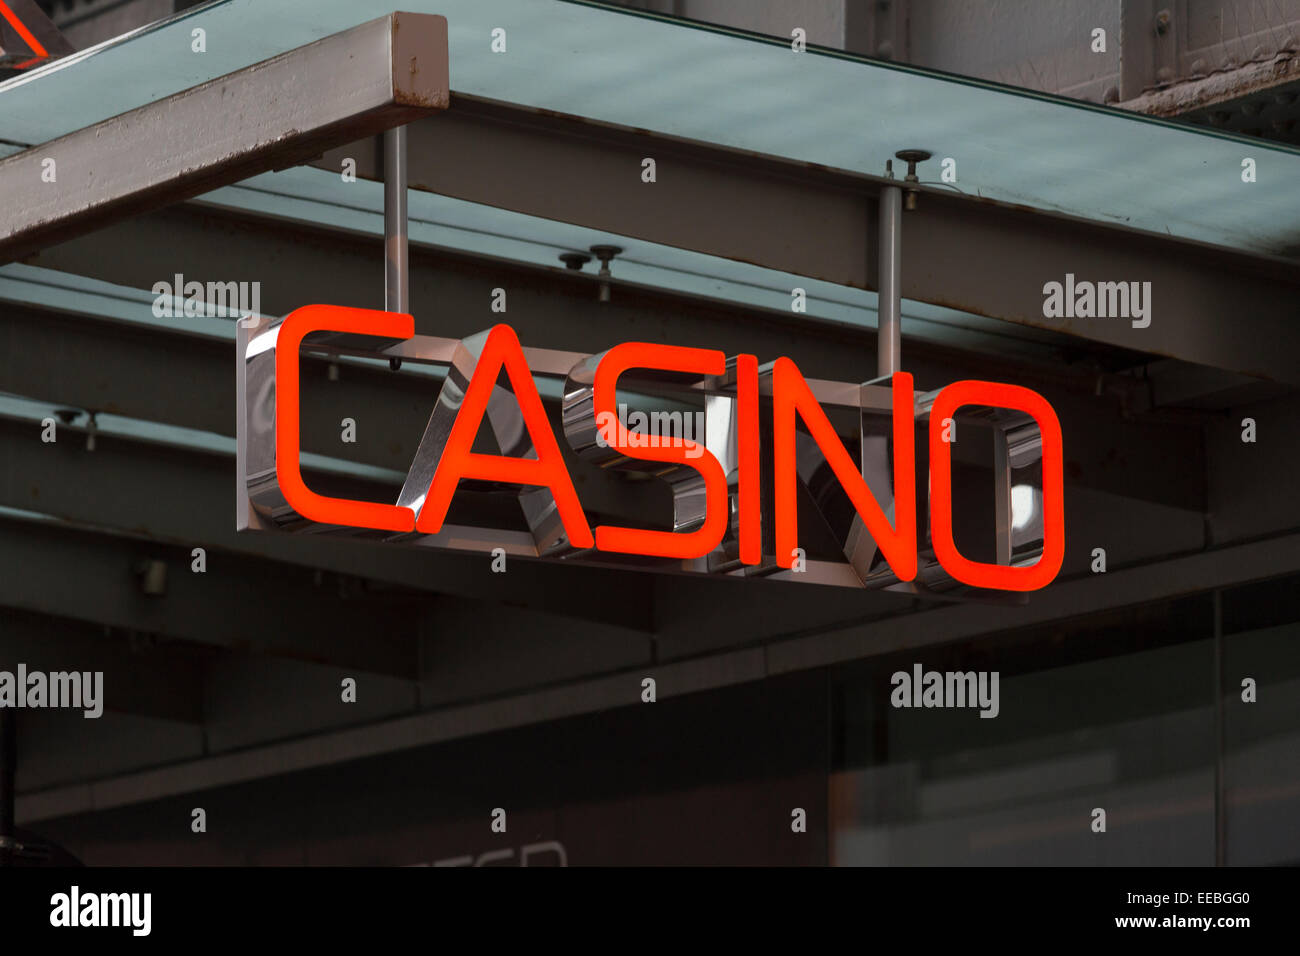 England, Manchester, casino sign Stock Photo